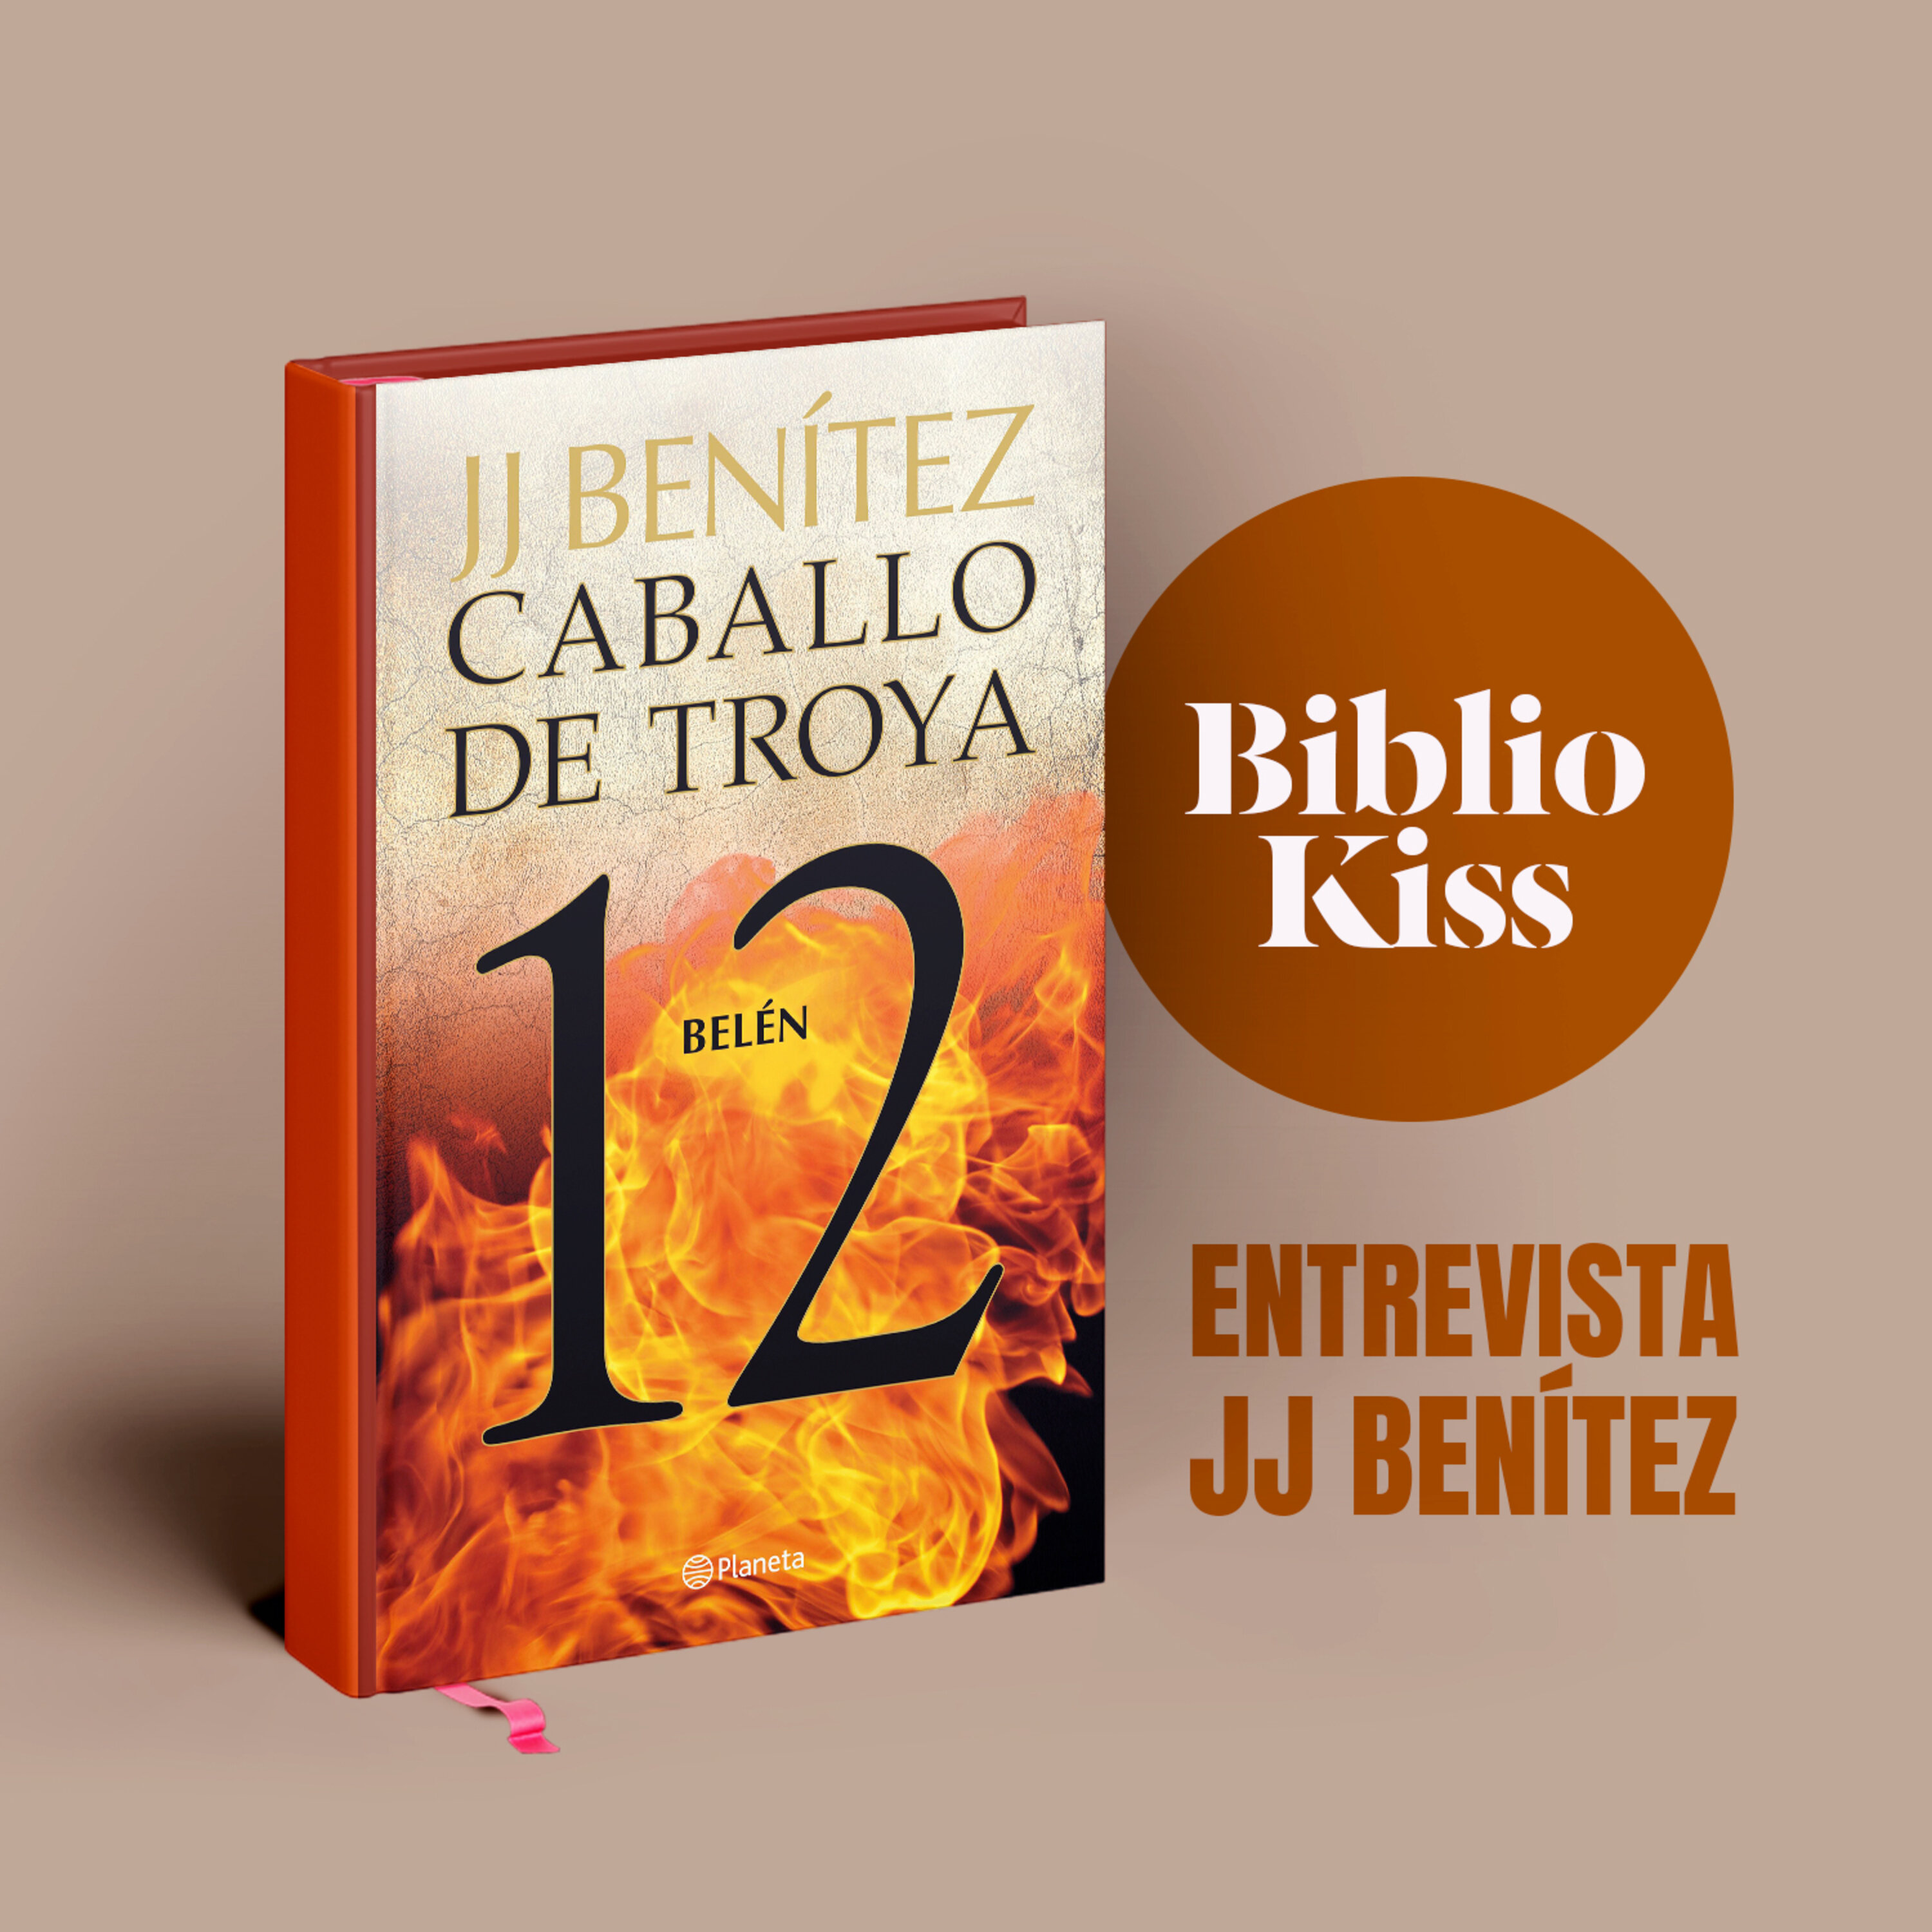 JJ Benítez nos presenta "Belén" la 12ª entrega de su saga 'Caballo de Troya'